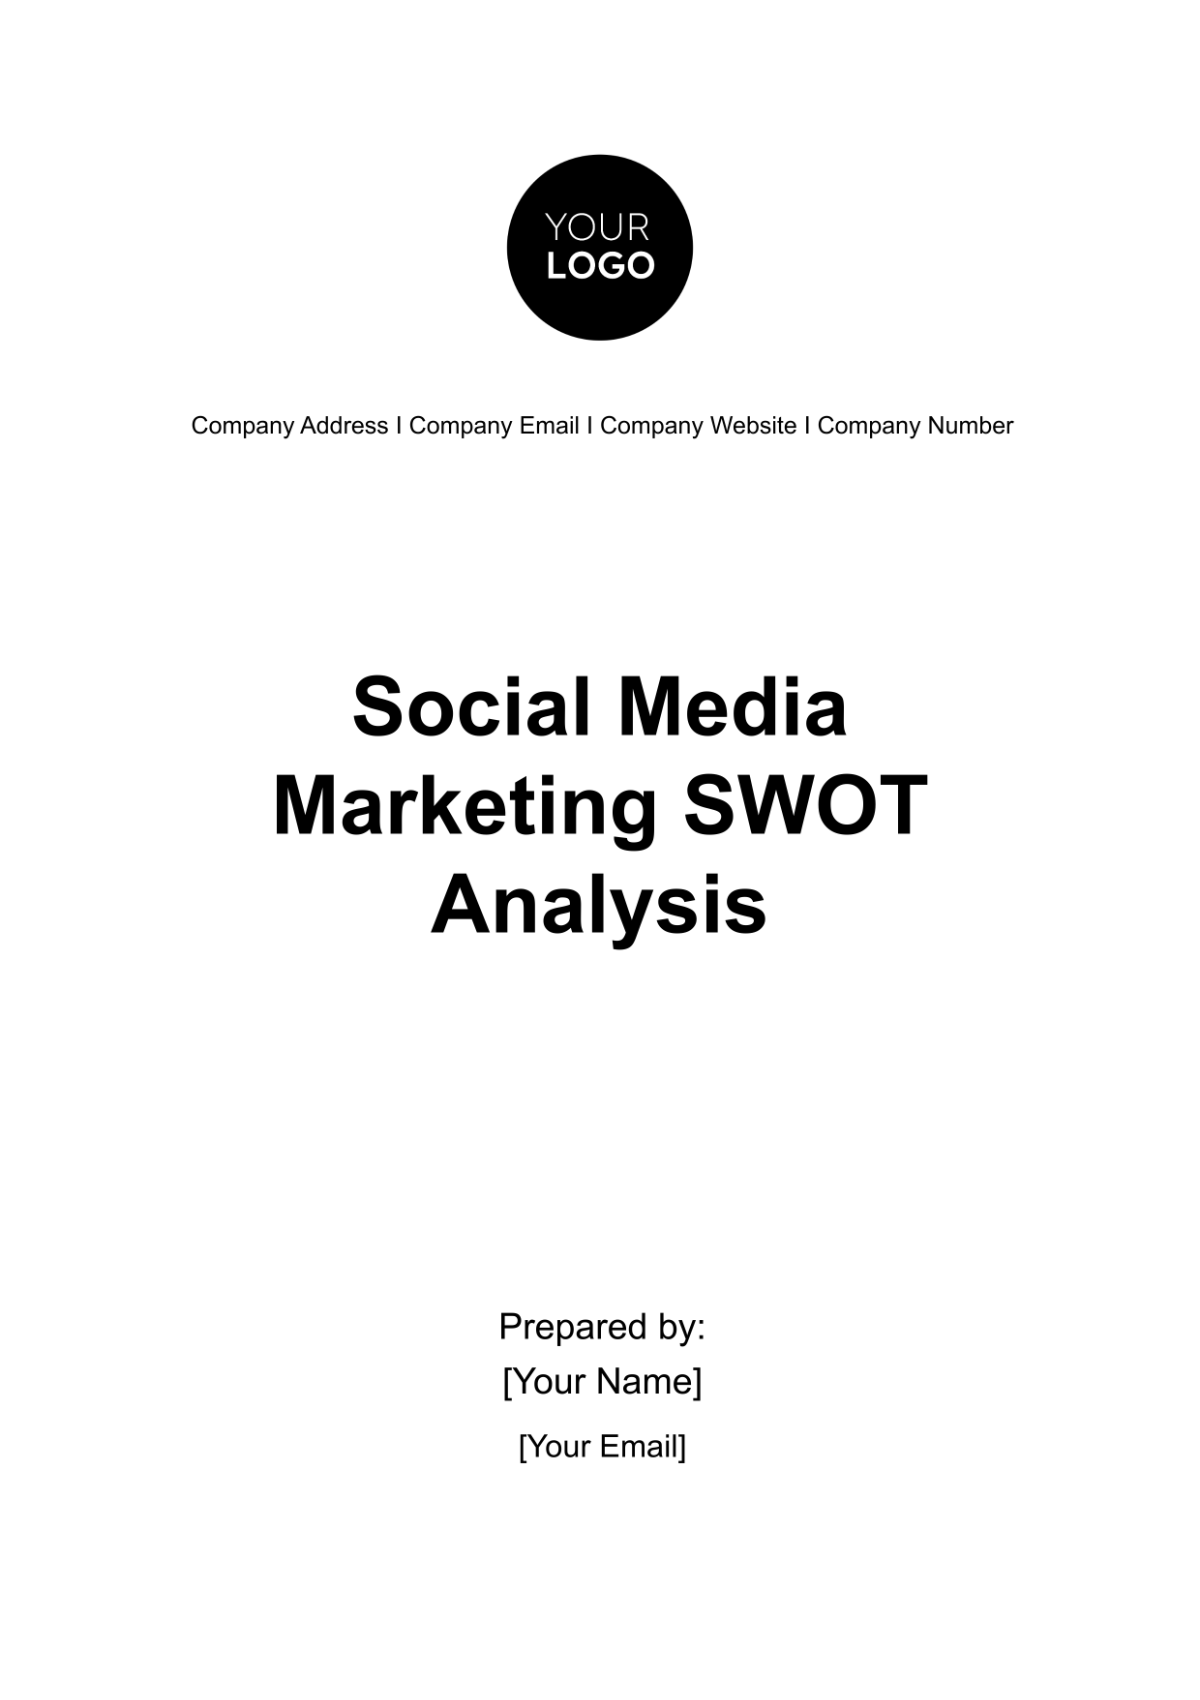 Social Media Marketing SWOT Analysis Template